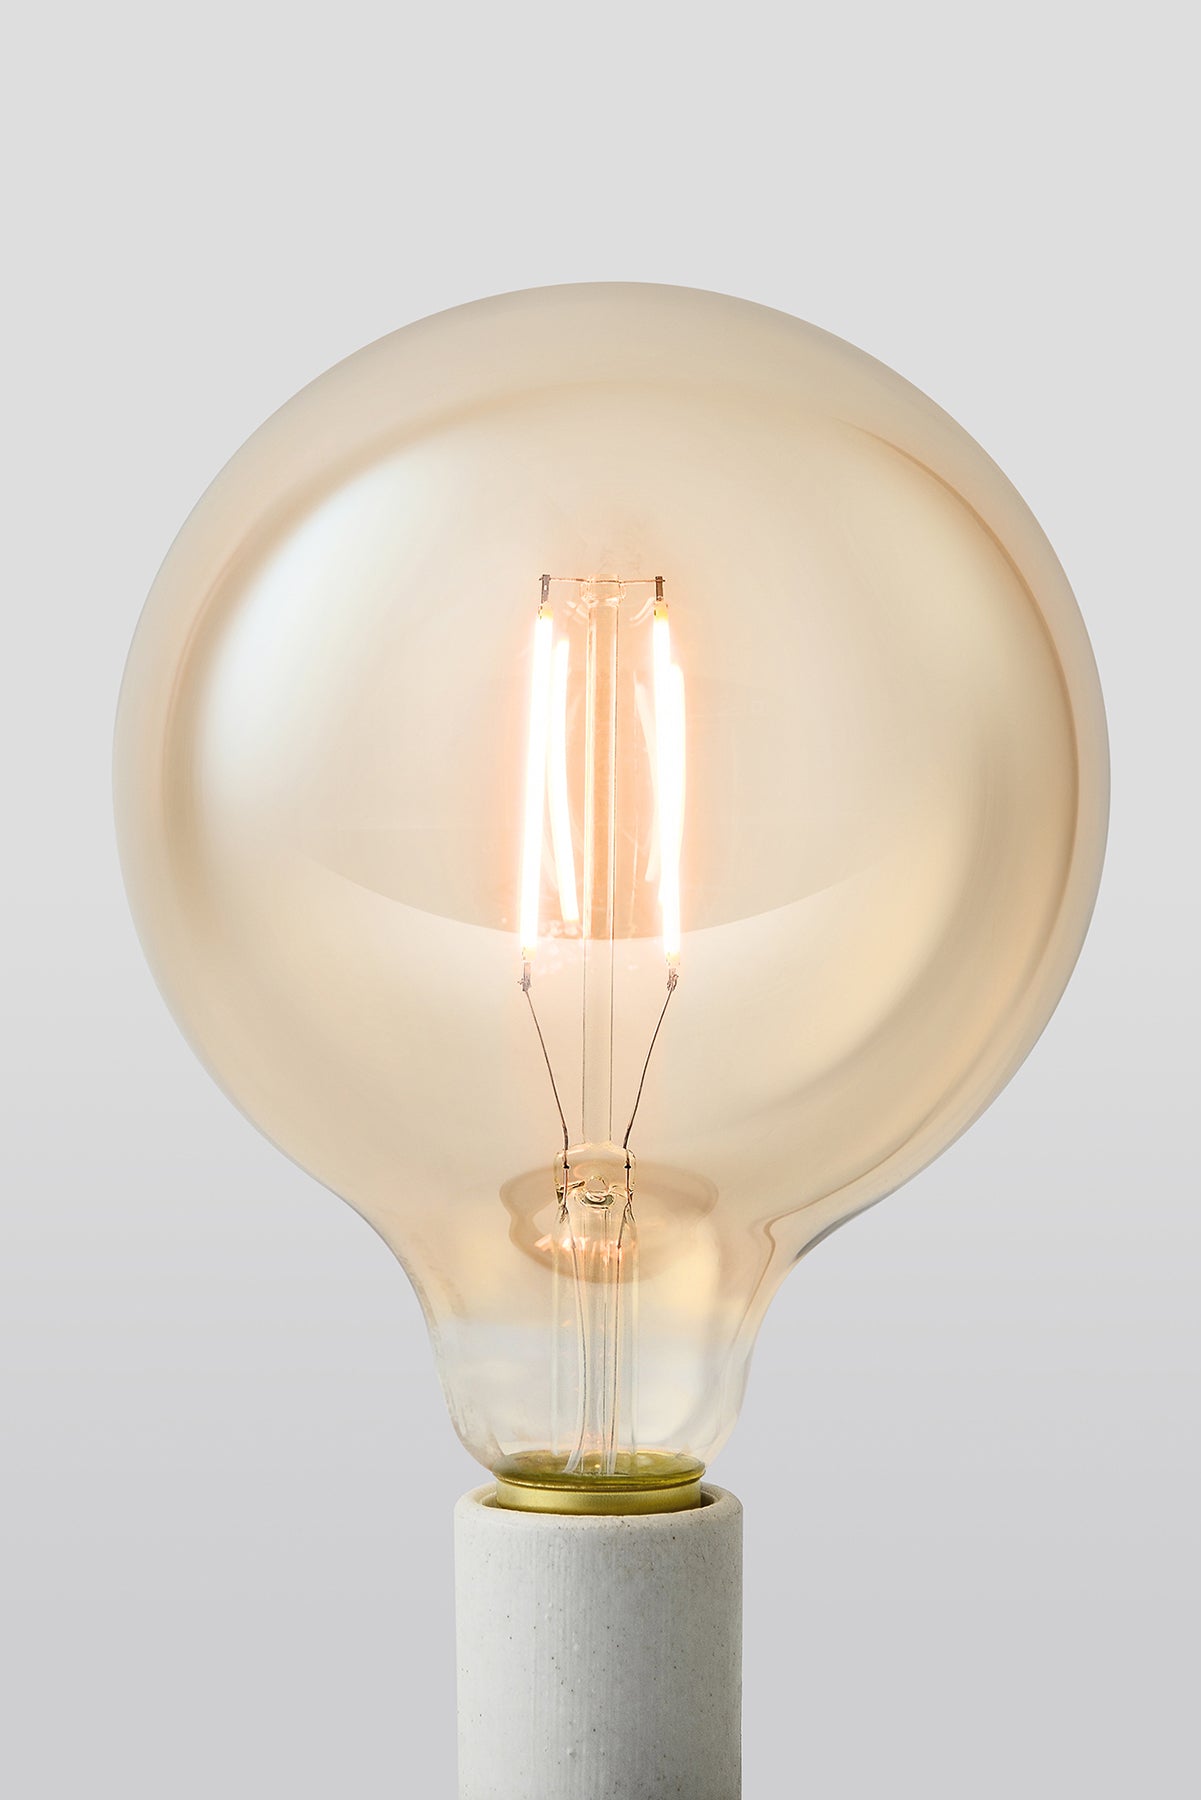 Modern G40 LED light bulb with warm vintage Edison style glow